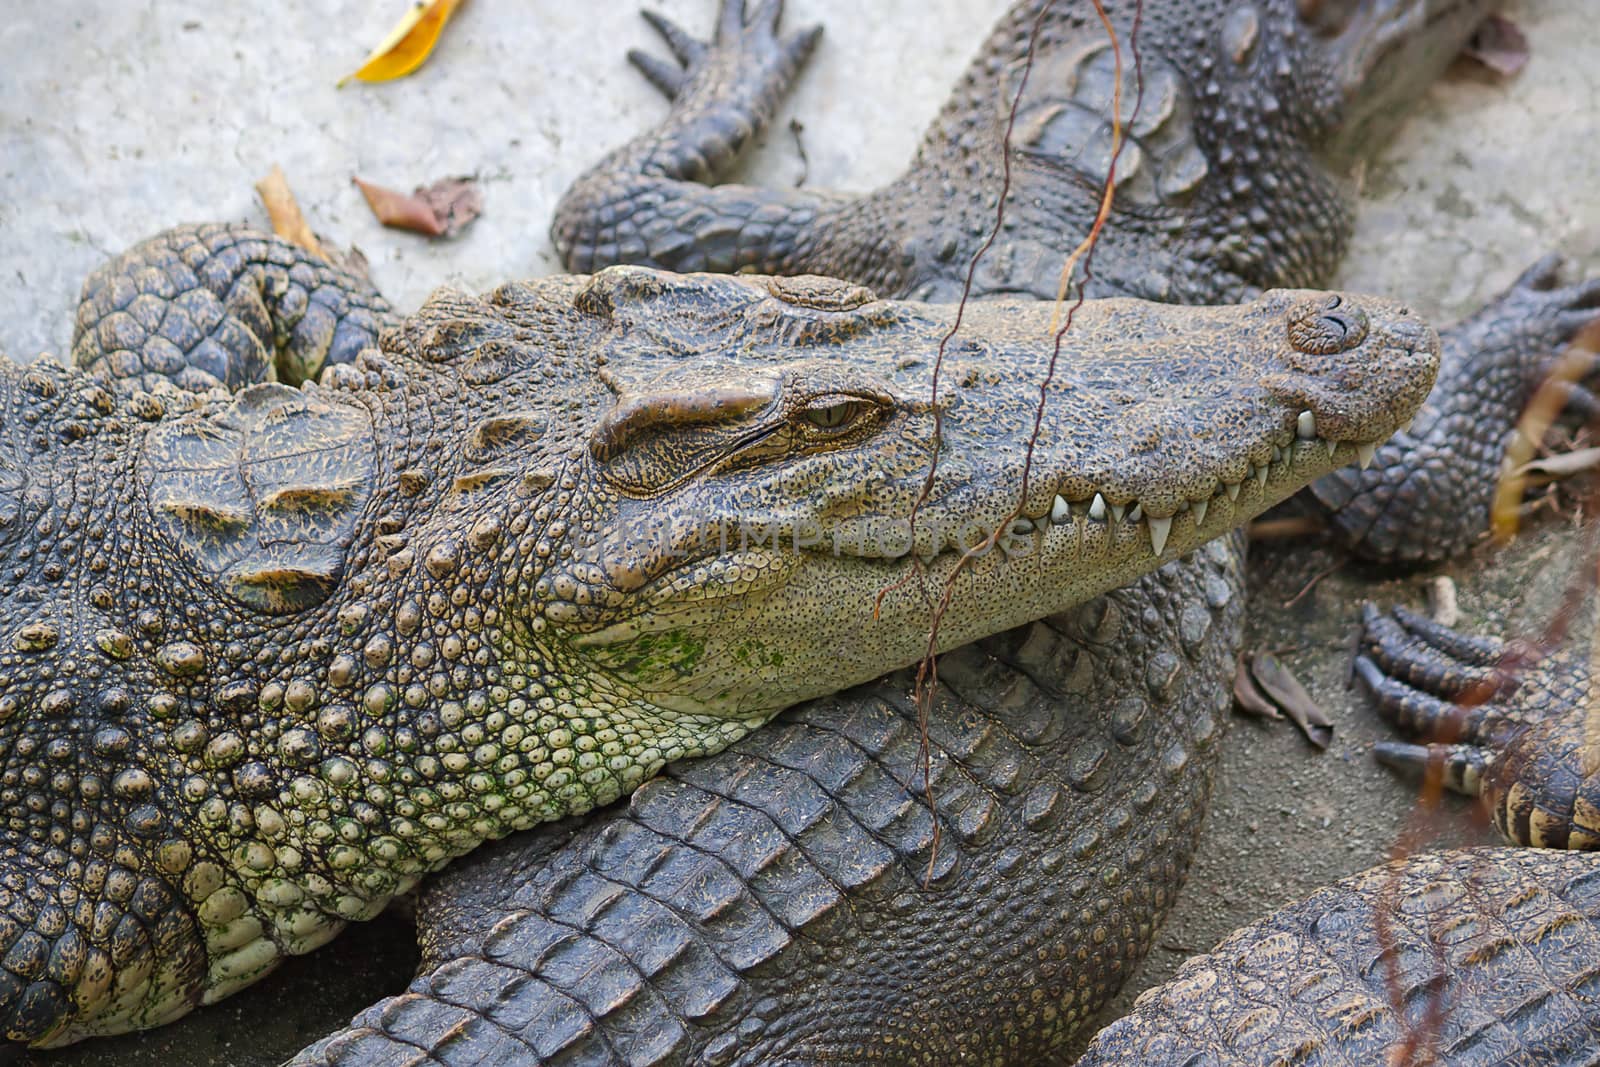 Big Crocodiles  close-up in zoo enclosure Phuket, Thailand.